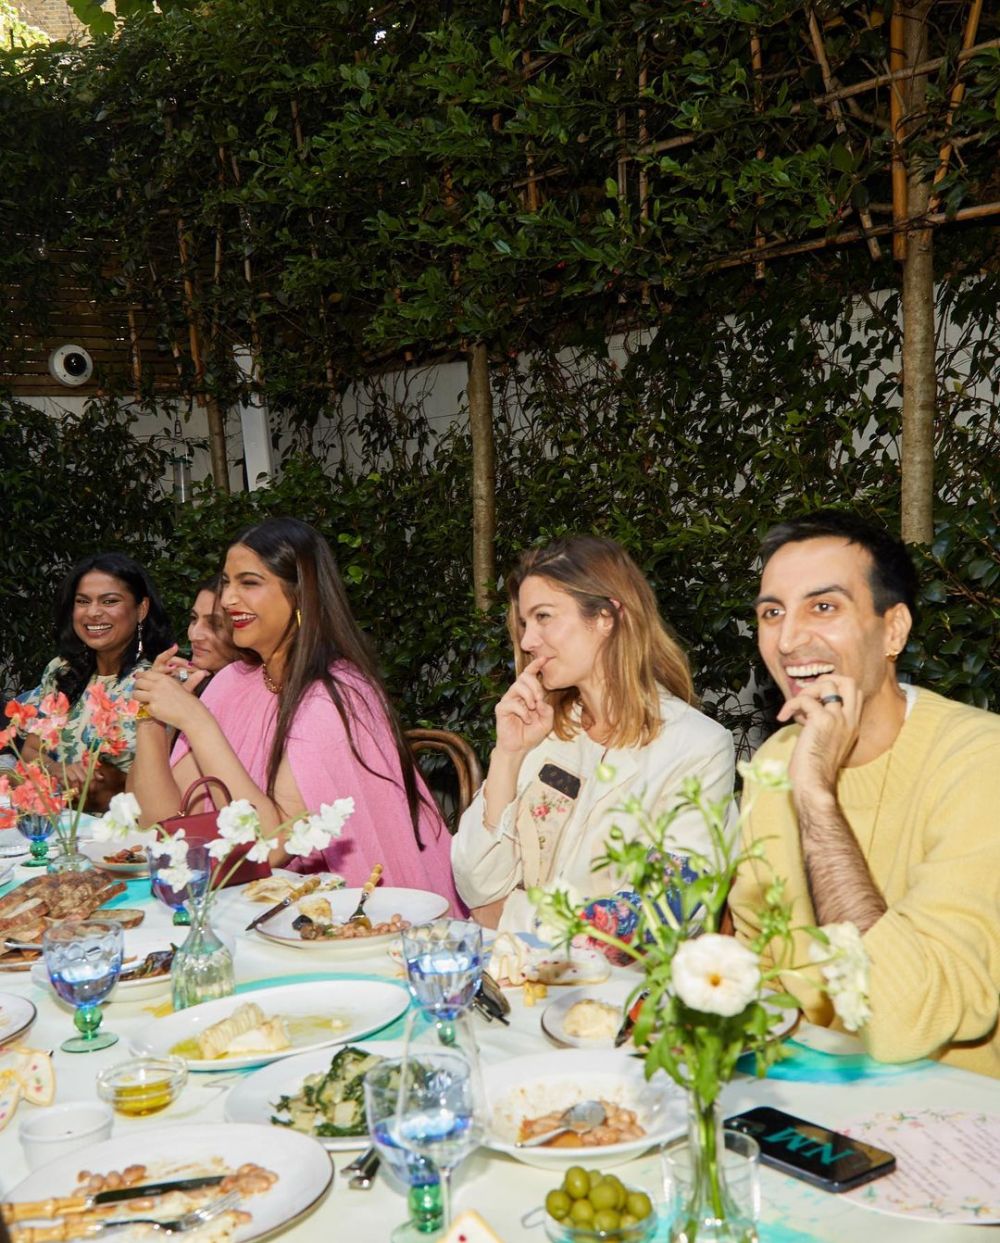 11 Potret baby shower Sonam Kapoor, usung konsep pesta kebun